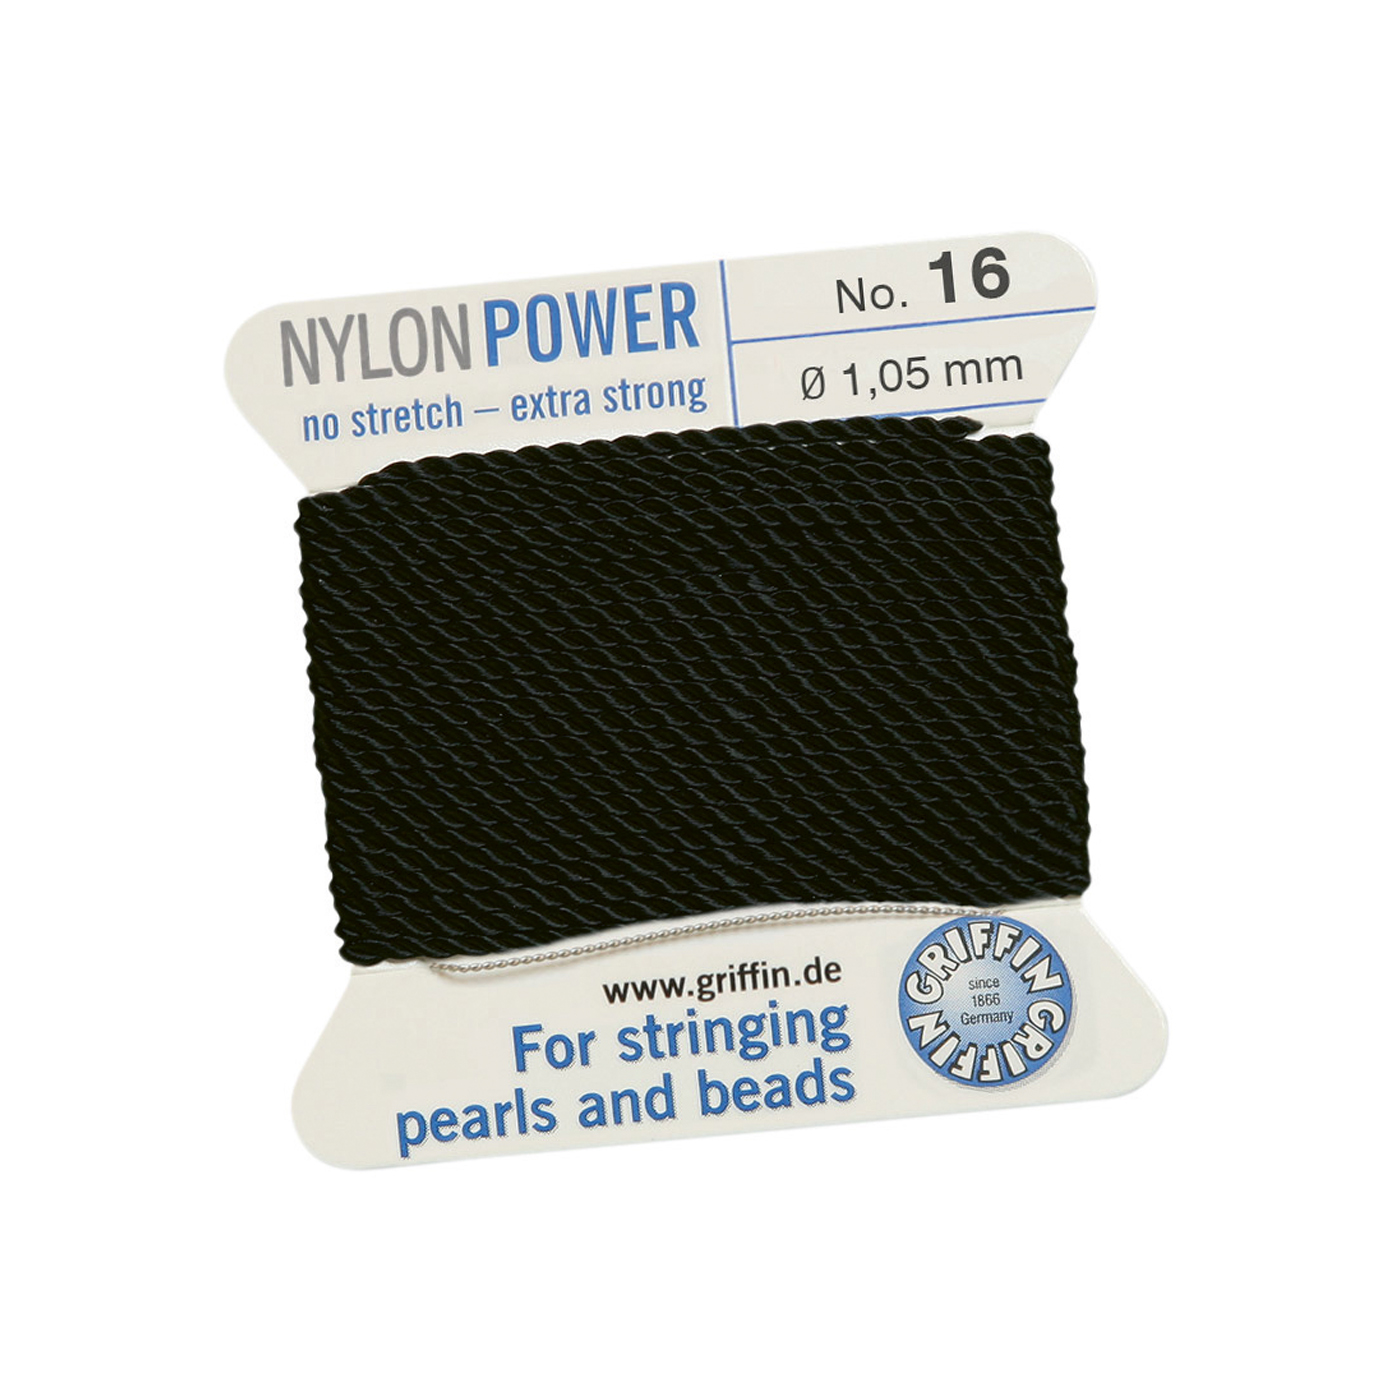 Bead Cord NylonPower, Black, No. 16 - 2 m